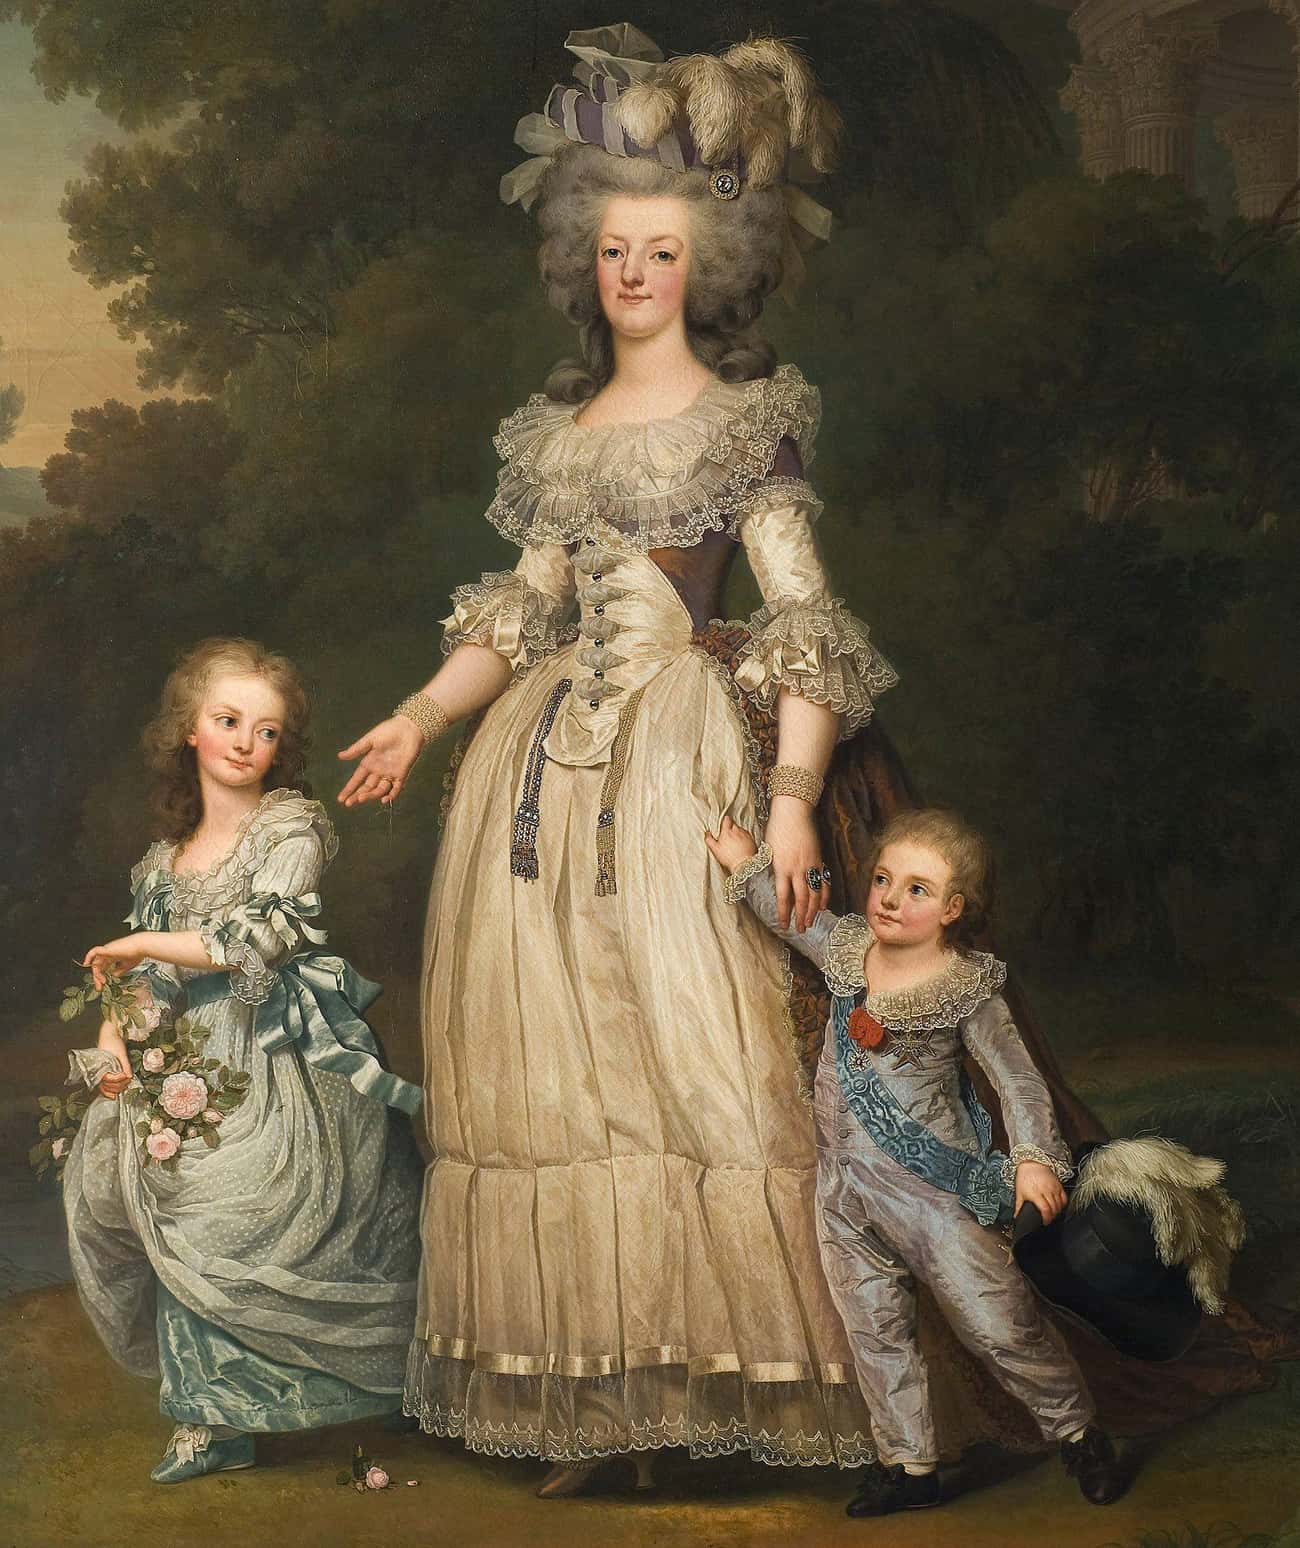 Marie Antoinette's Children Were Locked In Towers